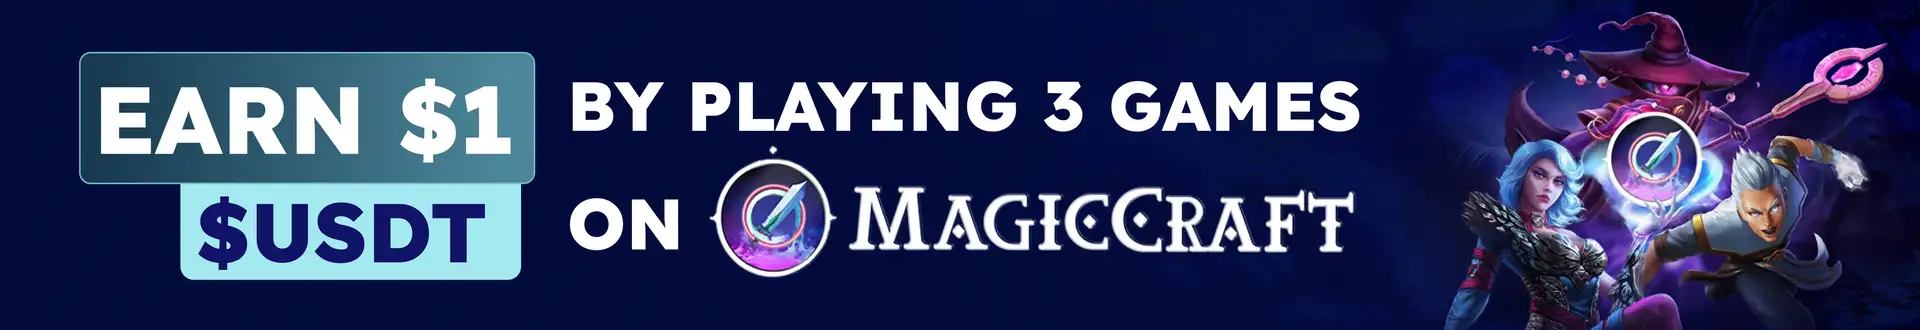 MagicCraft Magic Store Hot Offer 1